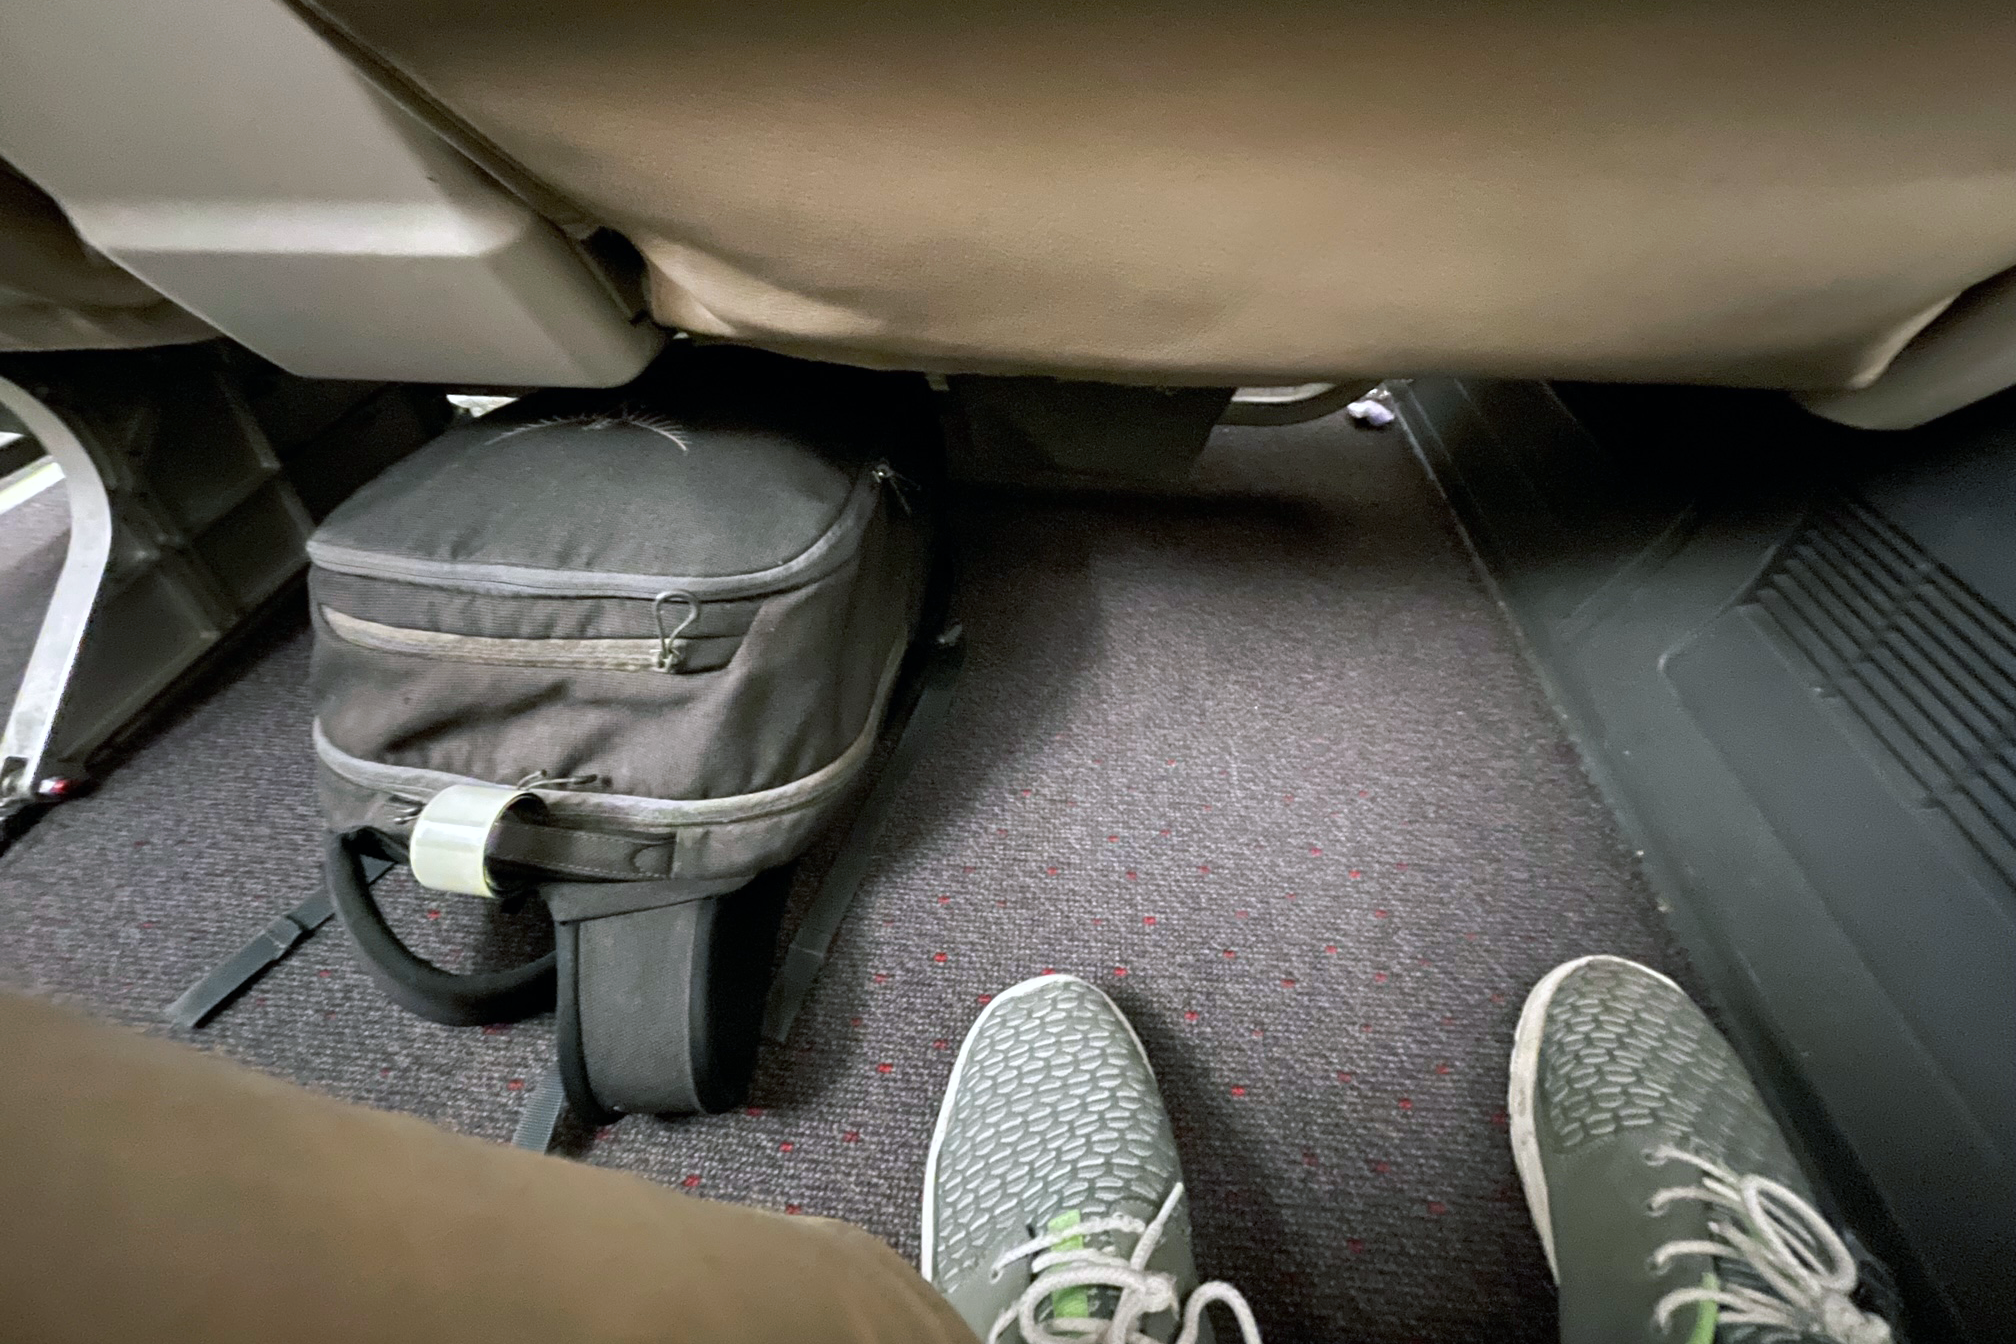 Bag under seat